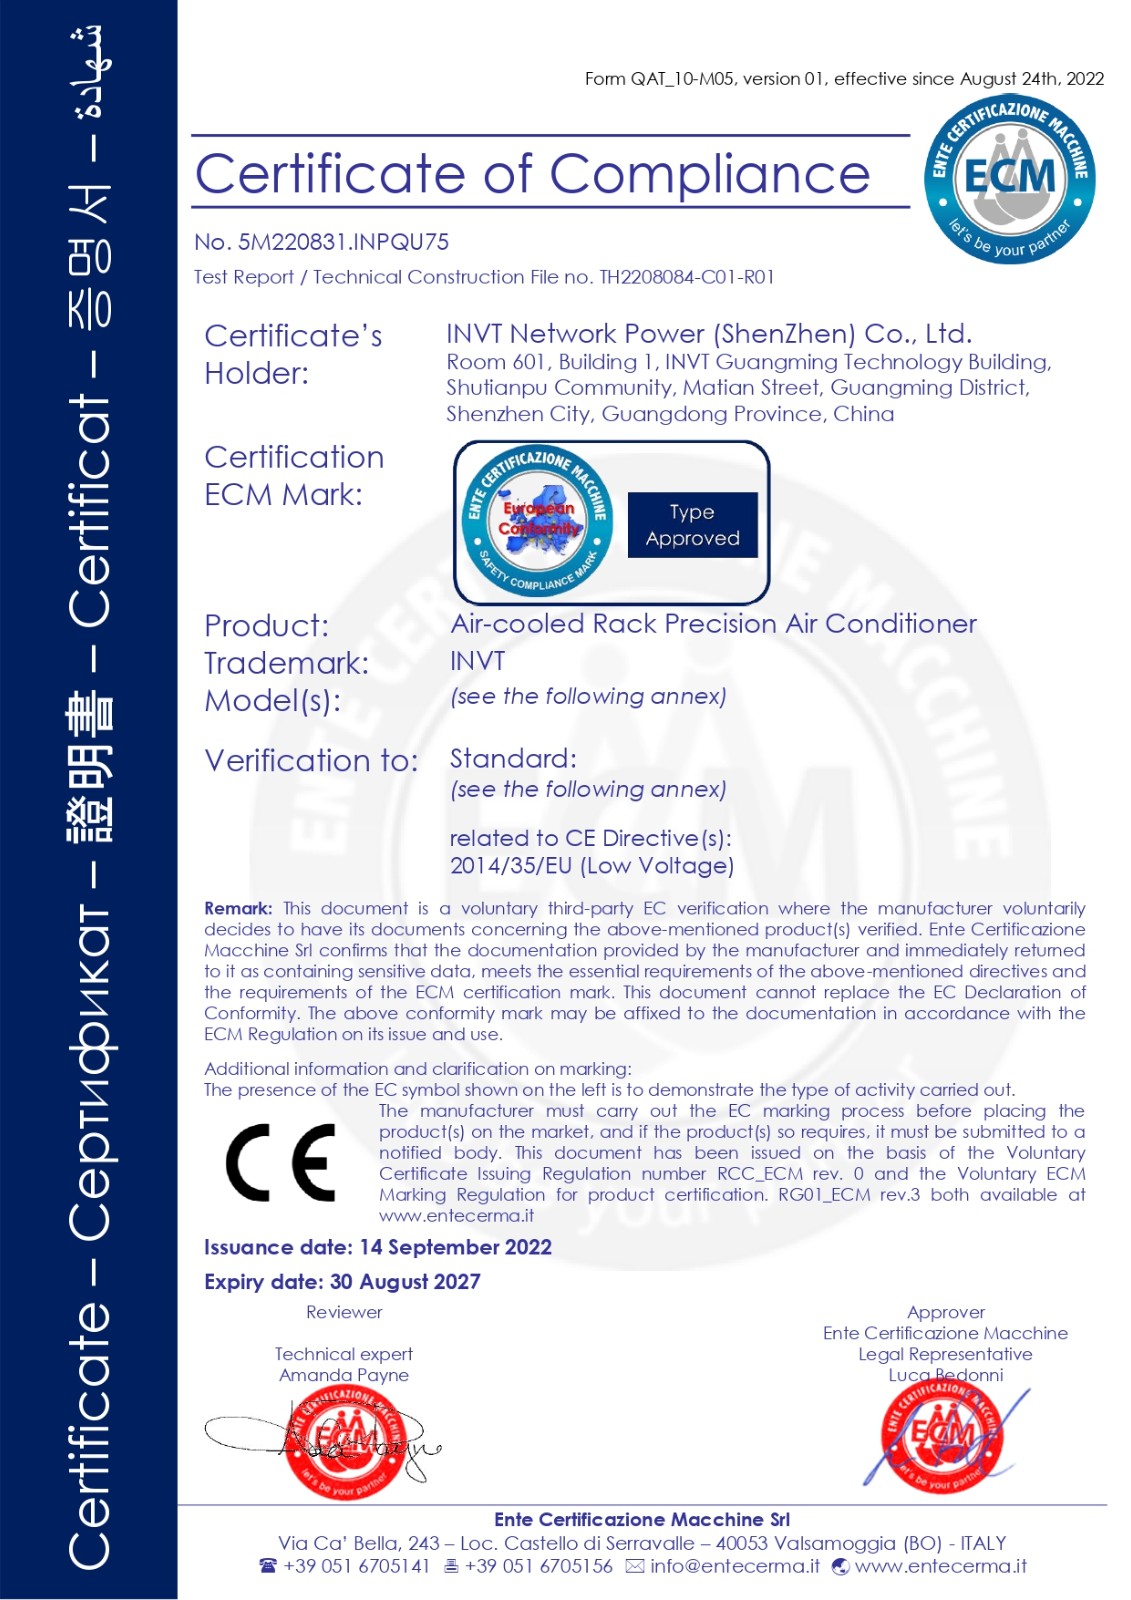 Rack air conditioner - LVD Certification 5M220831.INPQU75_page-0001.jpg